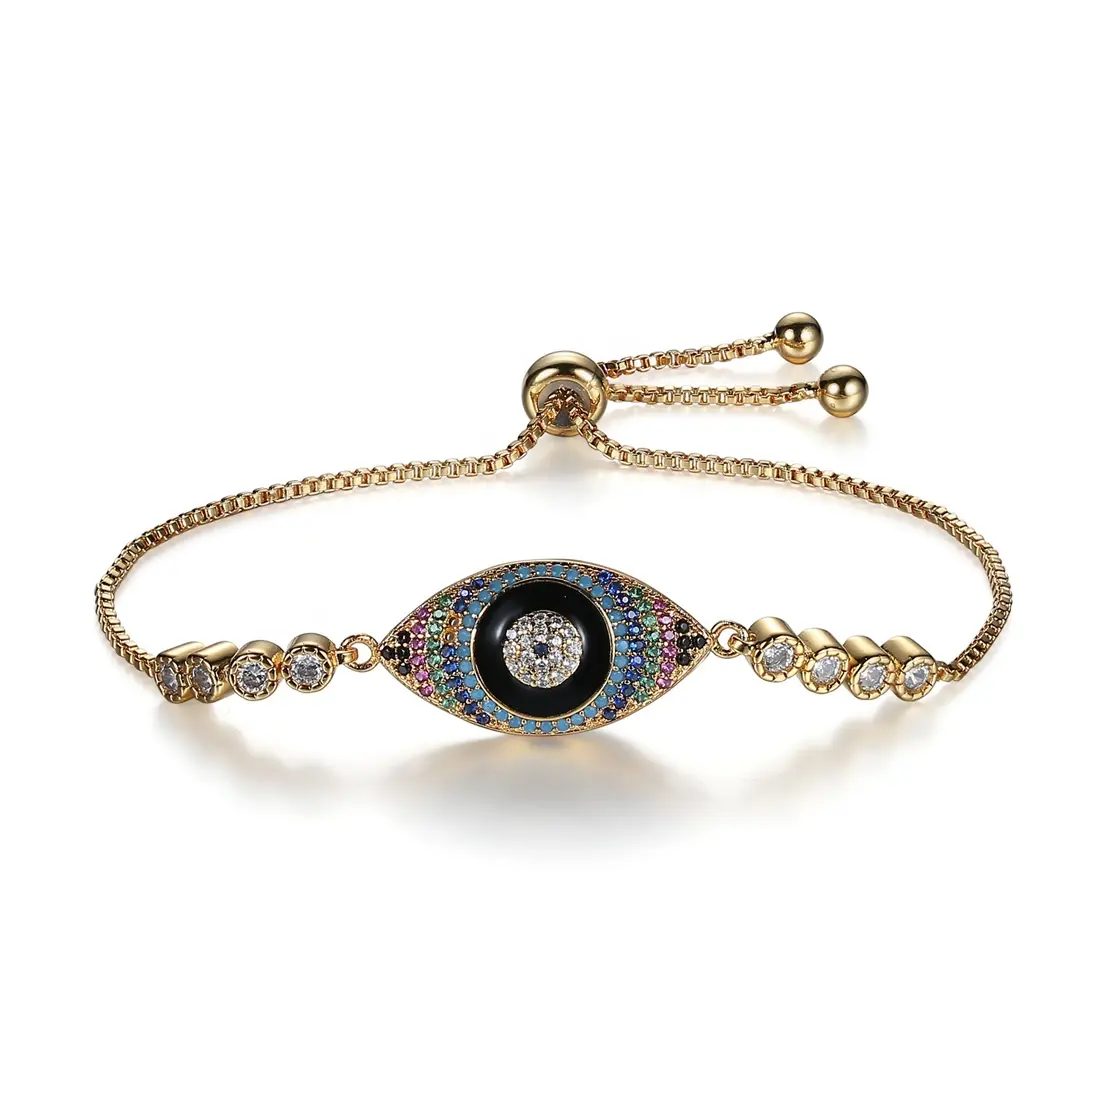 Women jewelry designer custom charms hamsa hand evil blue eye bangle bracelet